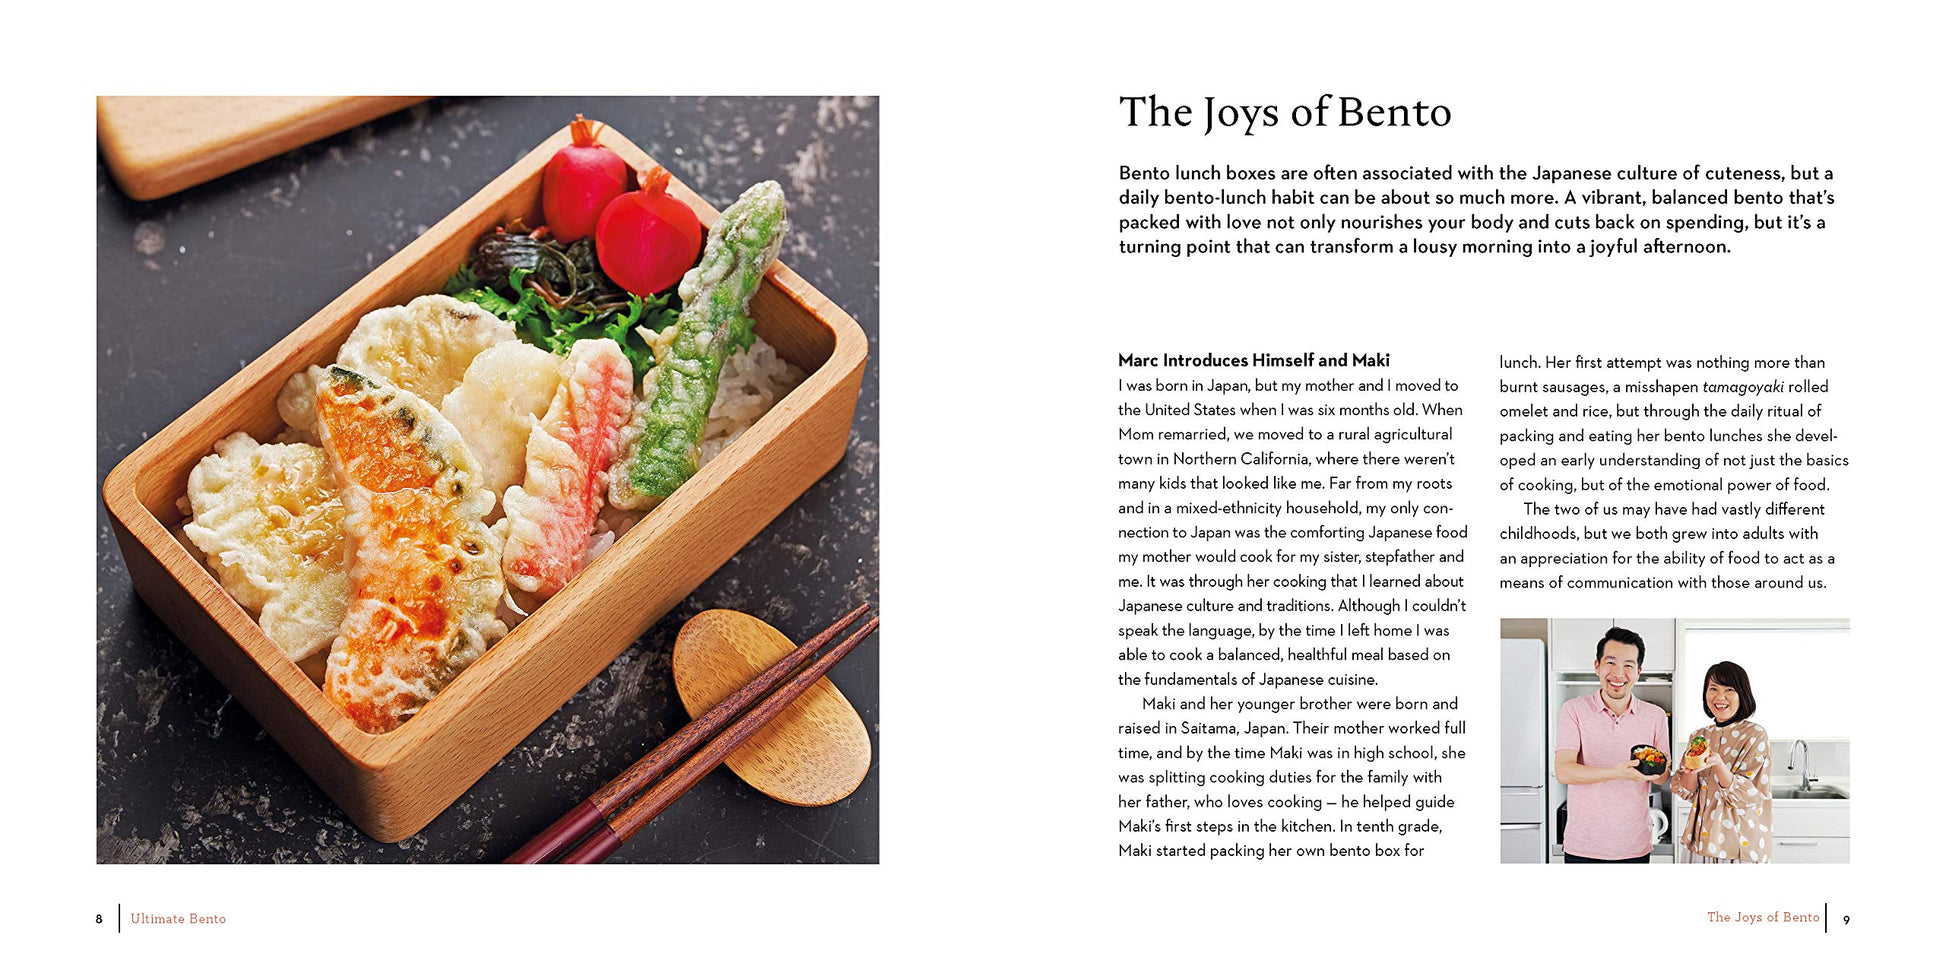 Ultimate Bento by Marc Matsumoto and Maki Ogawa